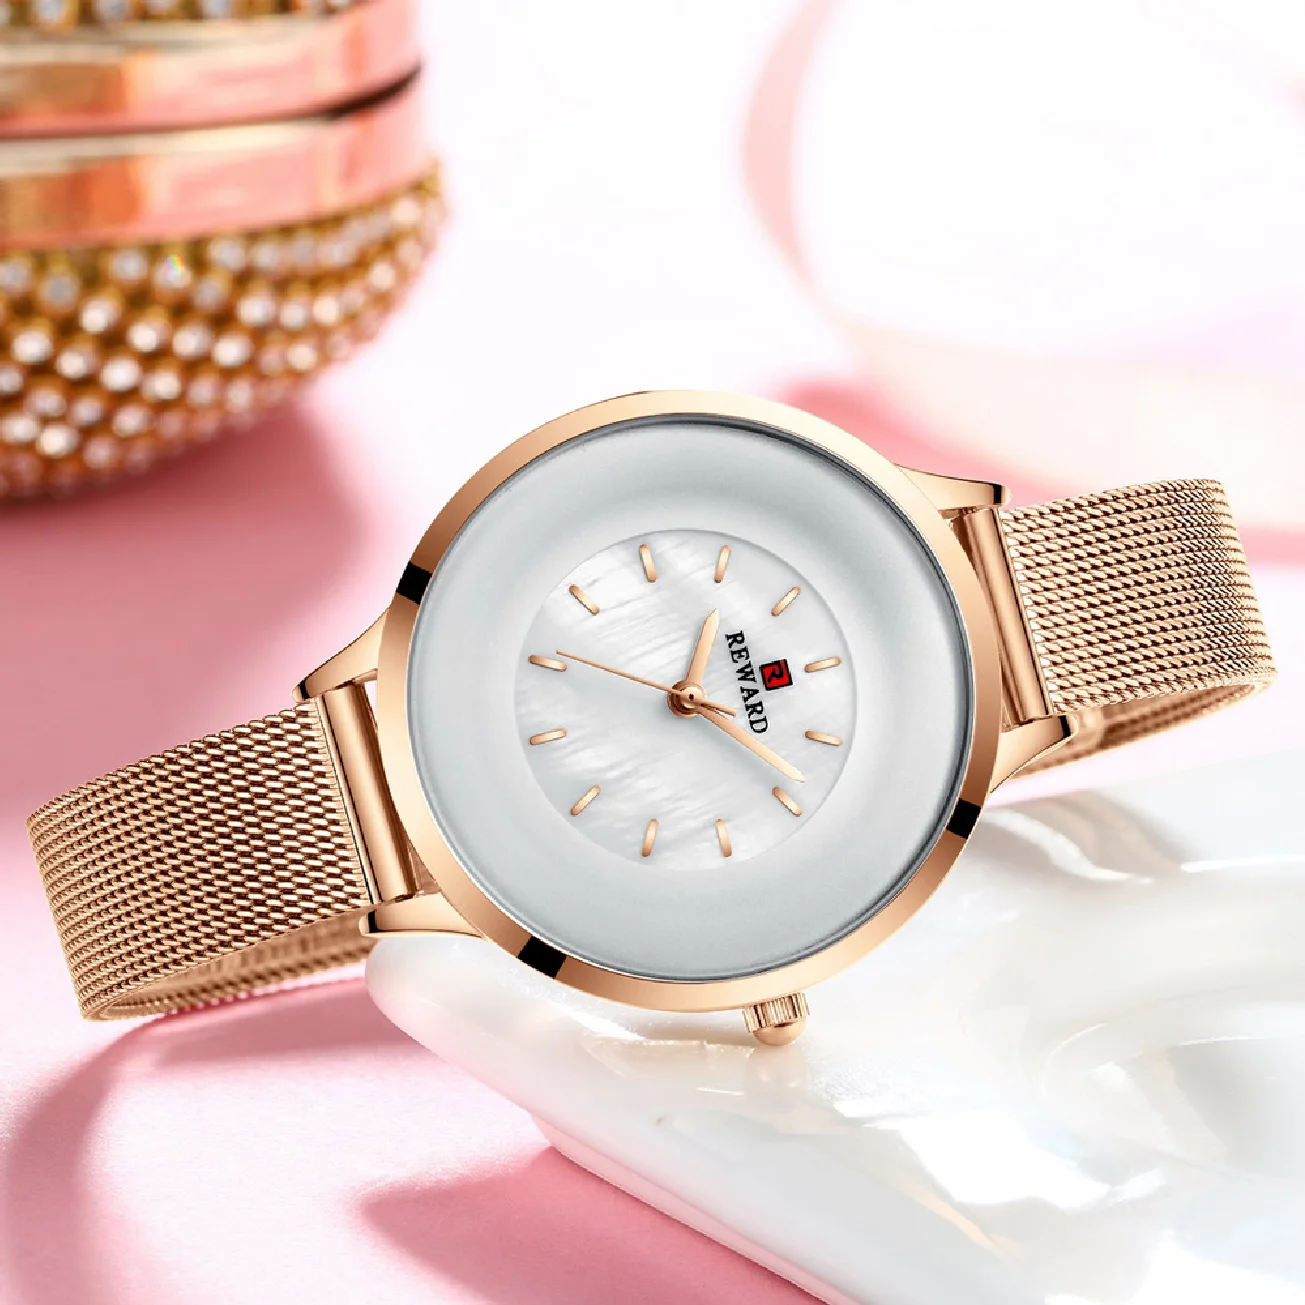 REWARD New Rose Gold Women Watch Business Quartz Watch Ladies Top Brand Luxury Female Wrist Watch Girl Clock Relogio Feminin enlarge